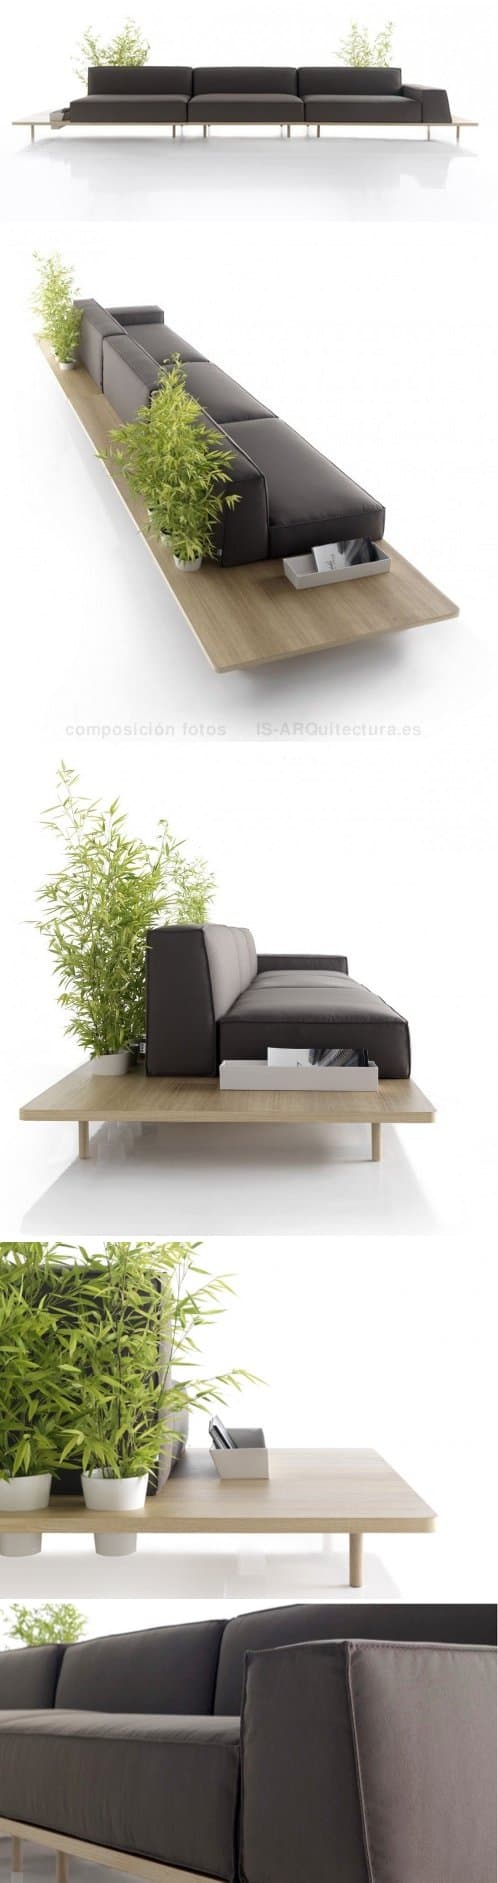 sofa-modular-mus-tarima-madera